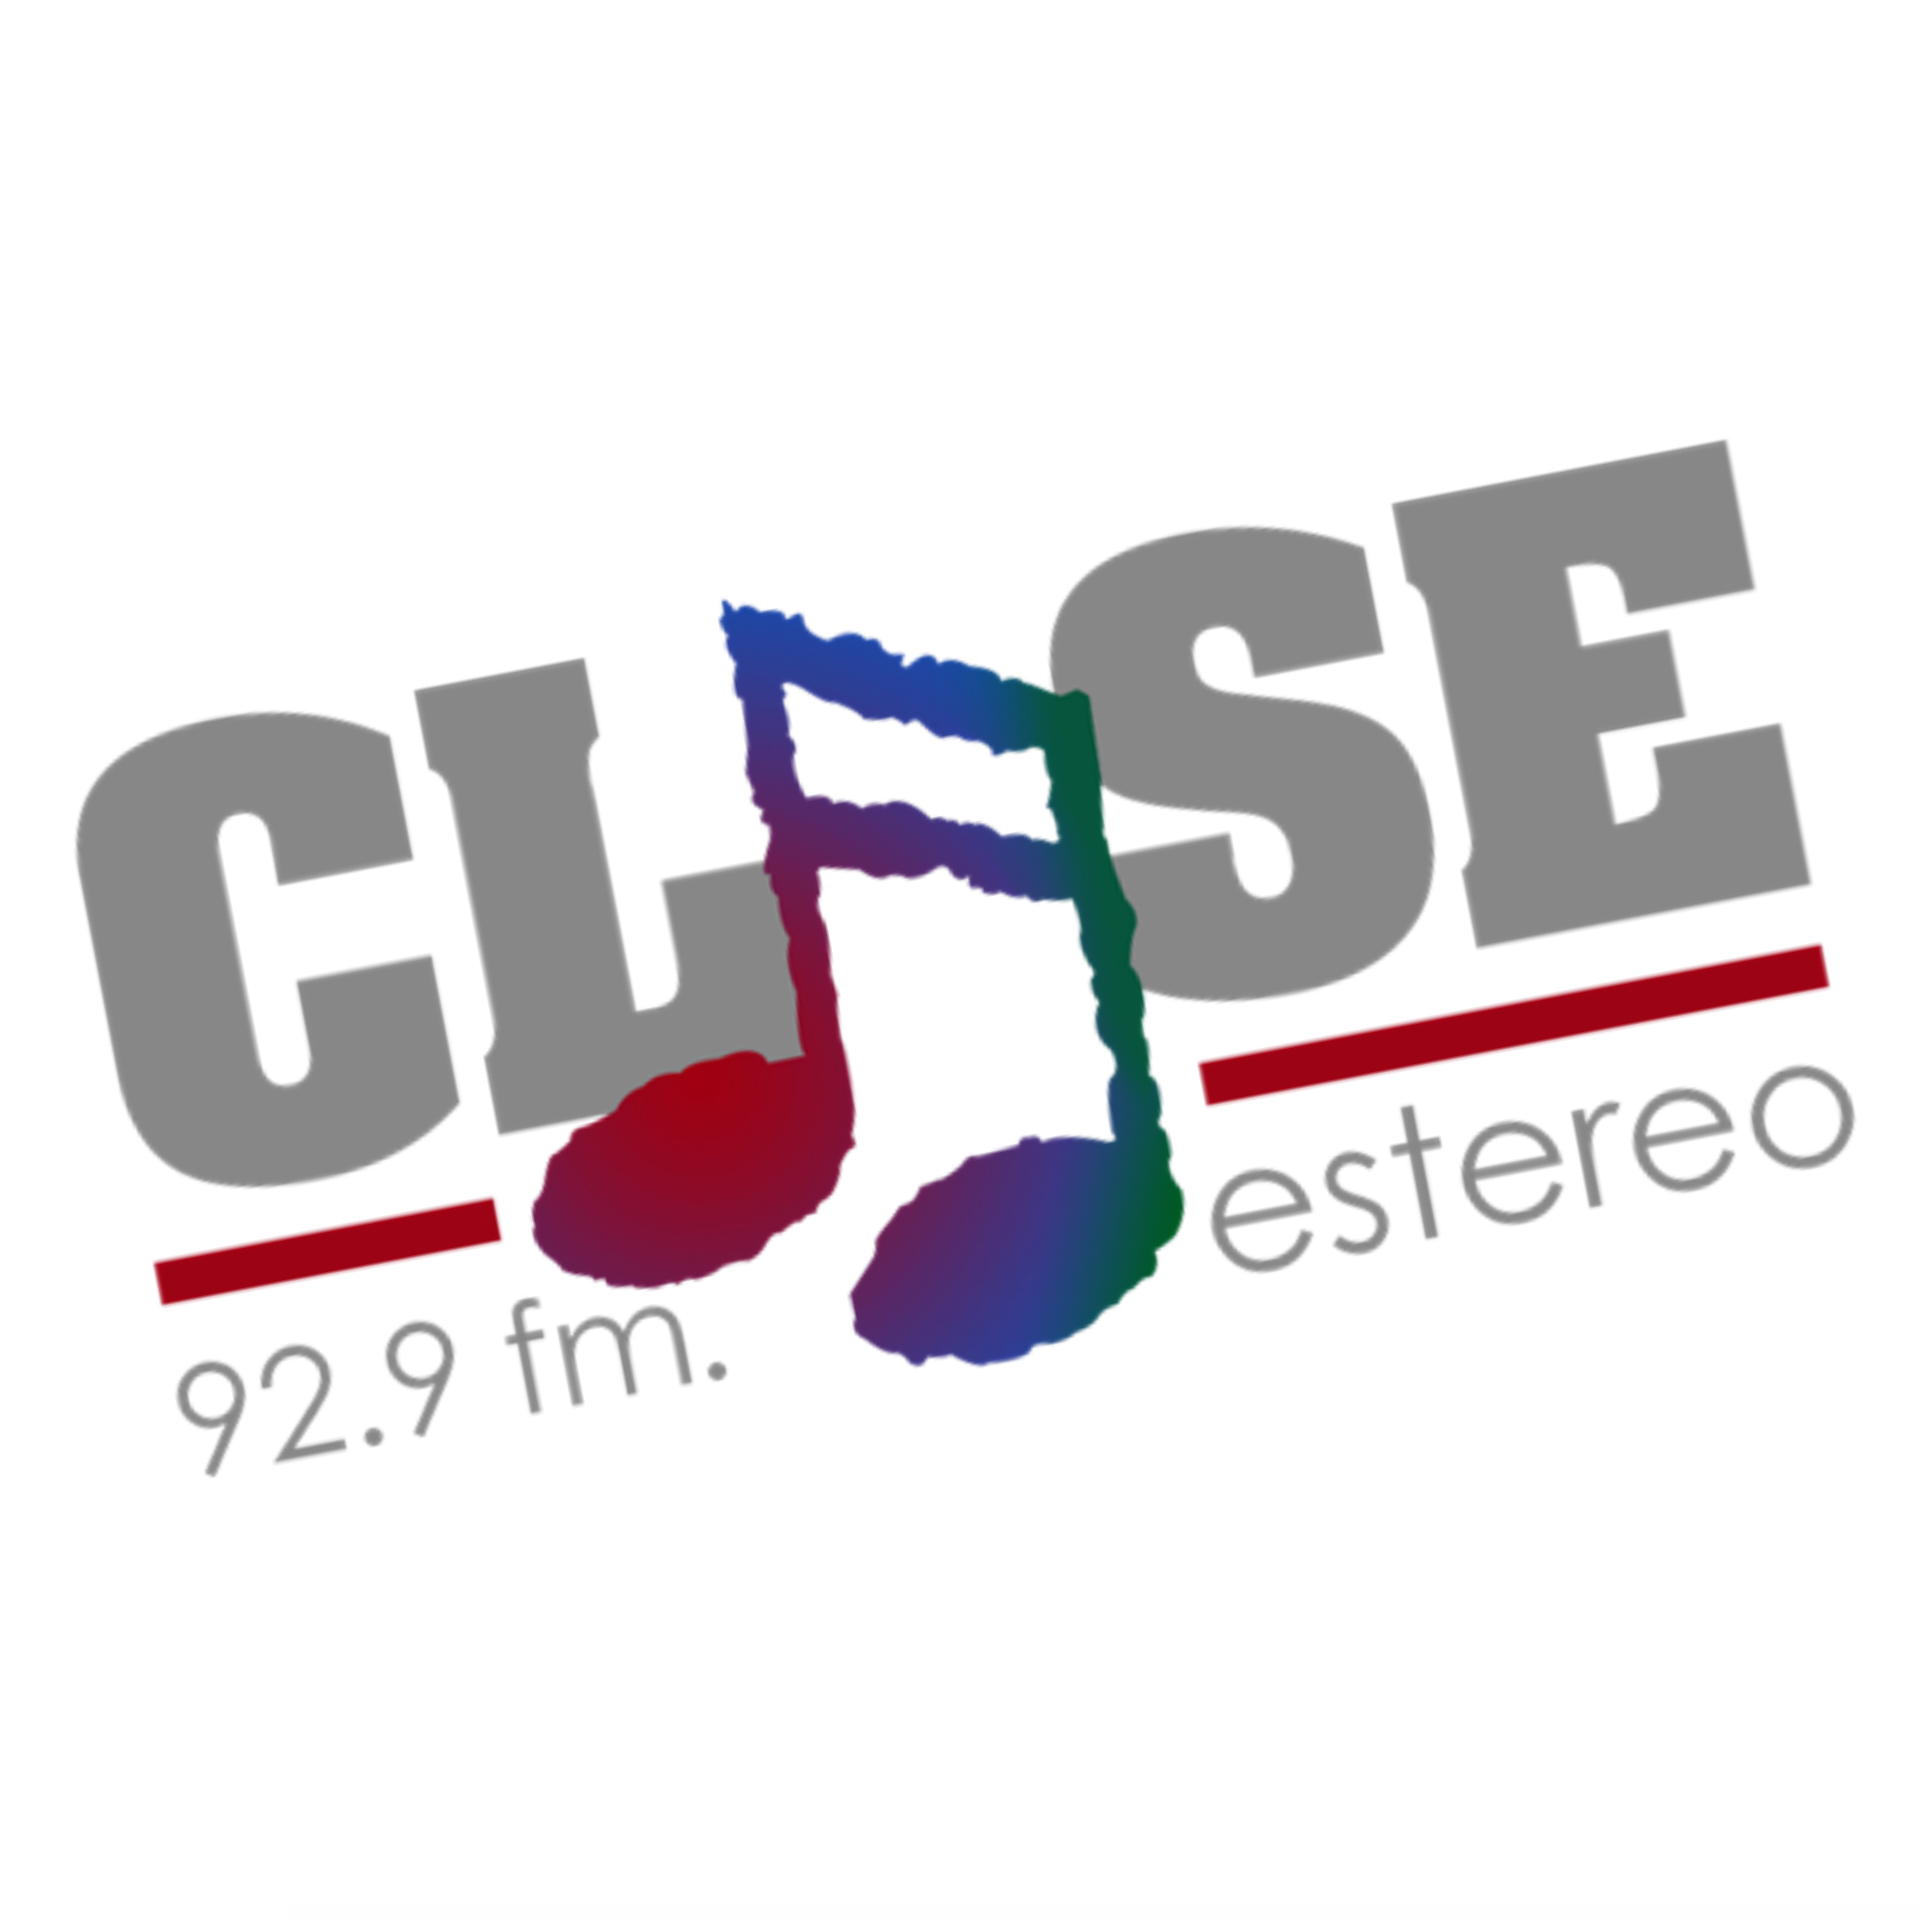 Listen Live Estereo Clase 92.9 FM - No es viejo, es Clase